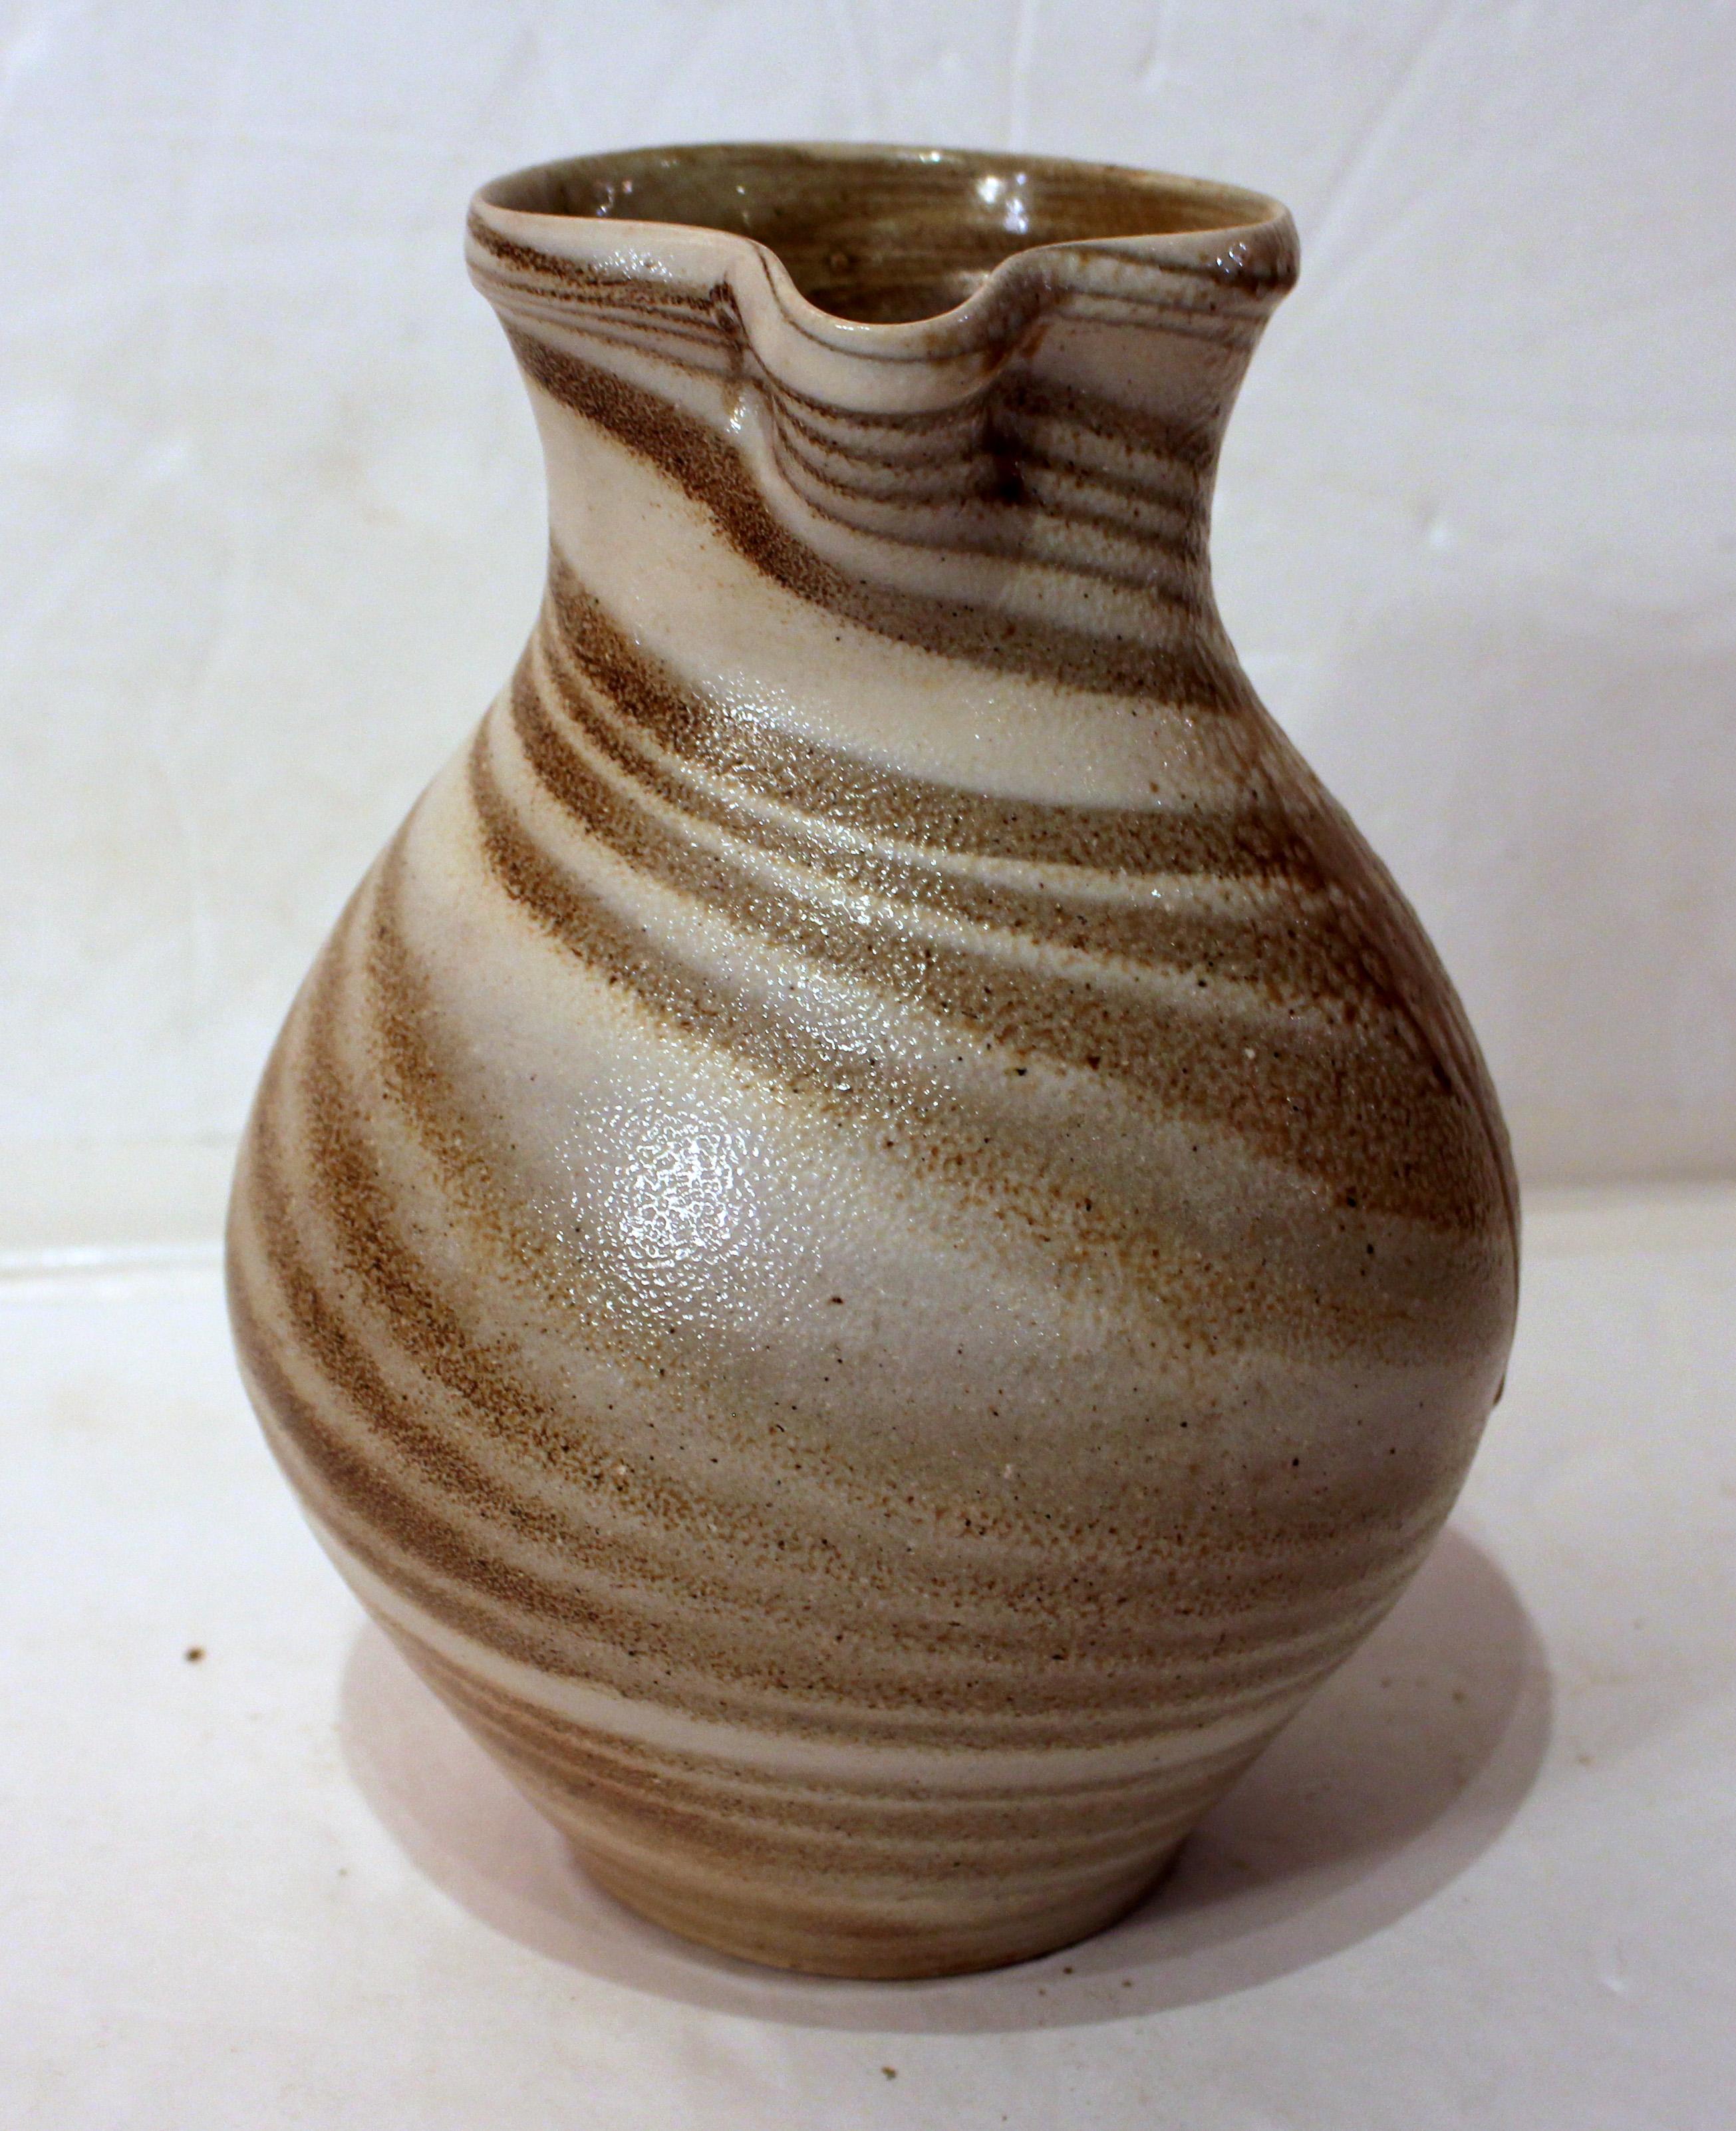 1984-1995 era pottery pitcher by Mark Hewitt. Signed. Swirl decoration & runs. Ash glaze. Provenance: Estate of Katharine Reid, former director Cleveland Museum of Art.
10